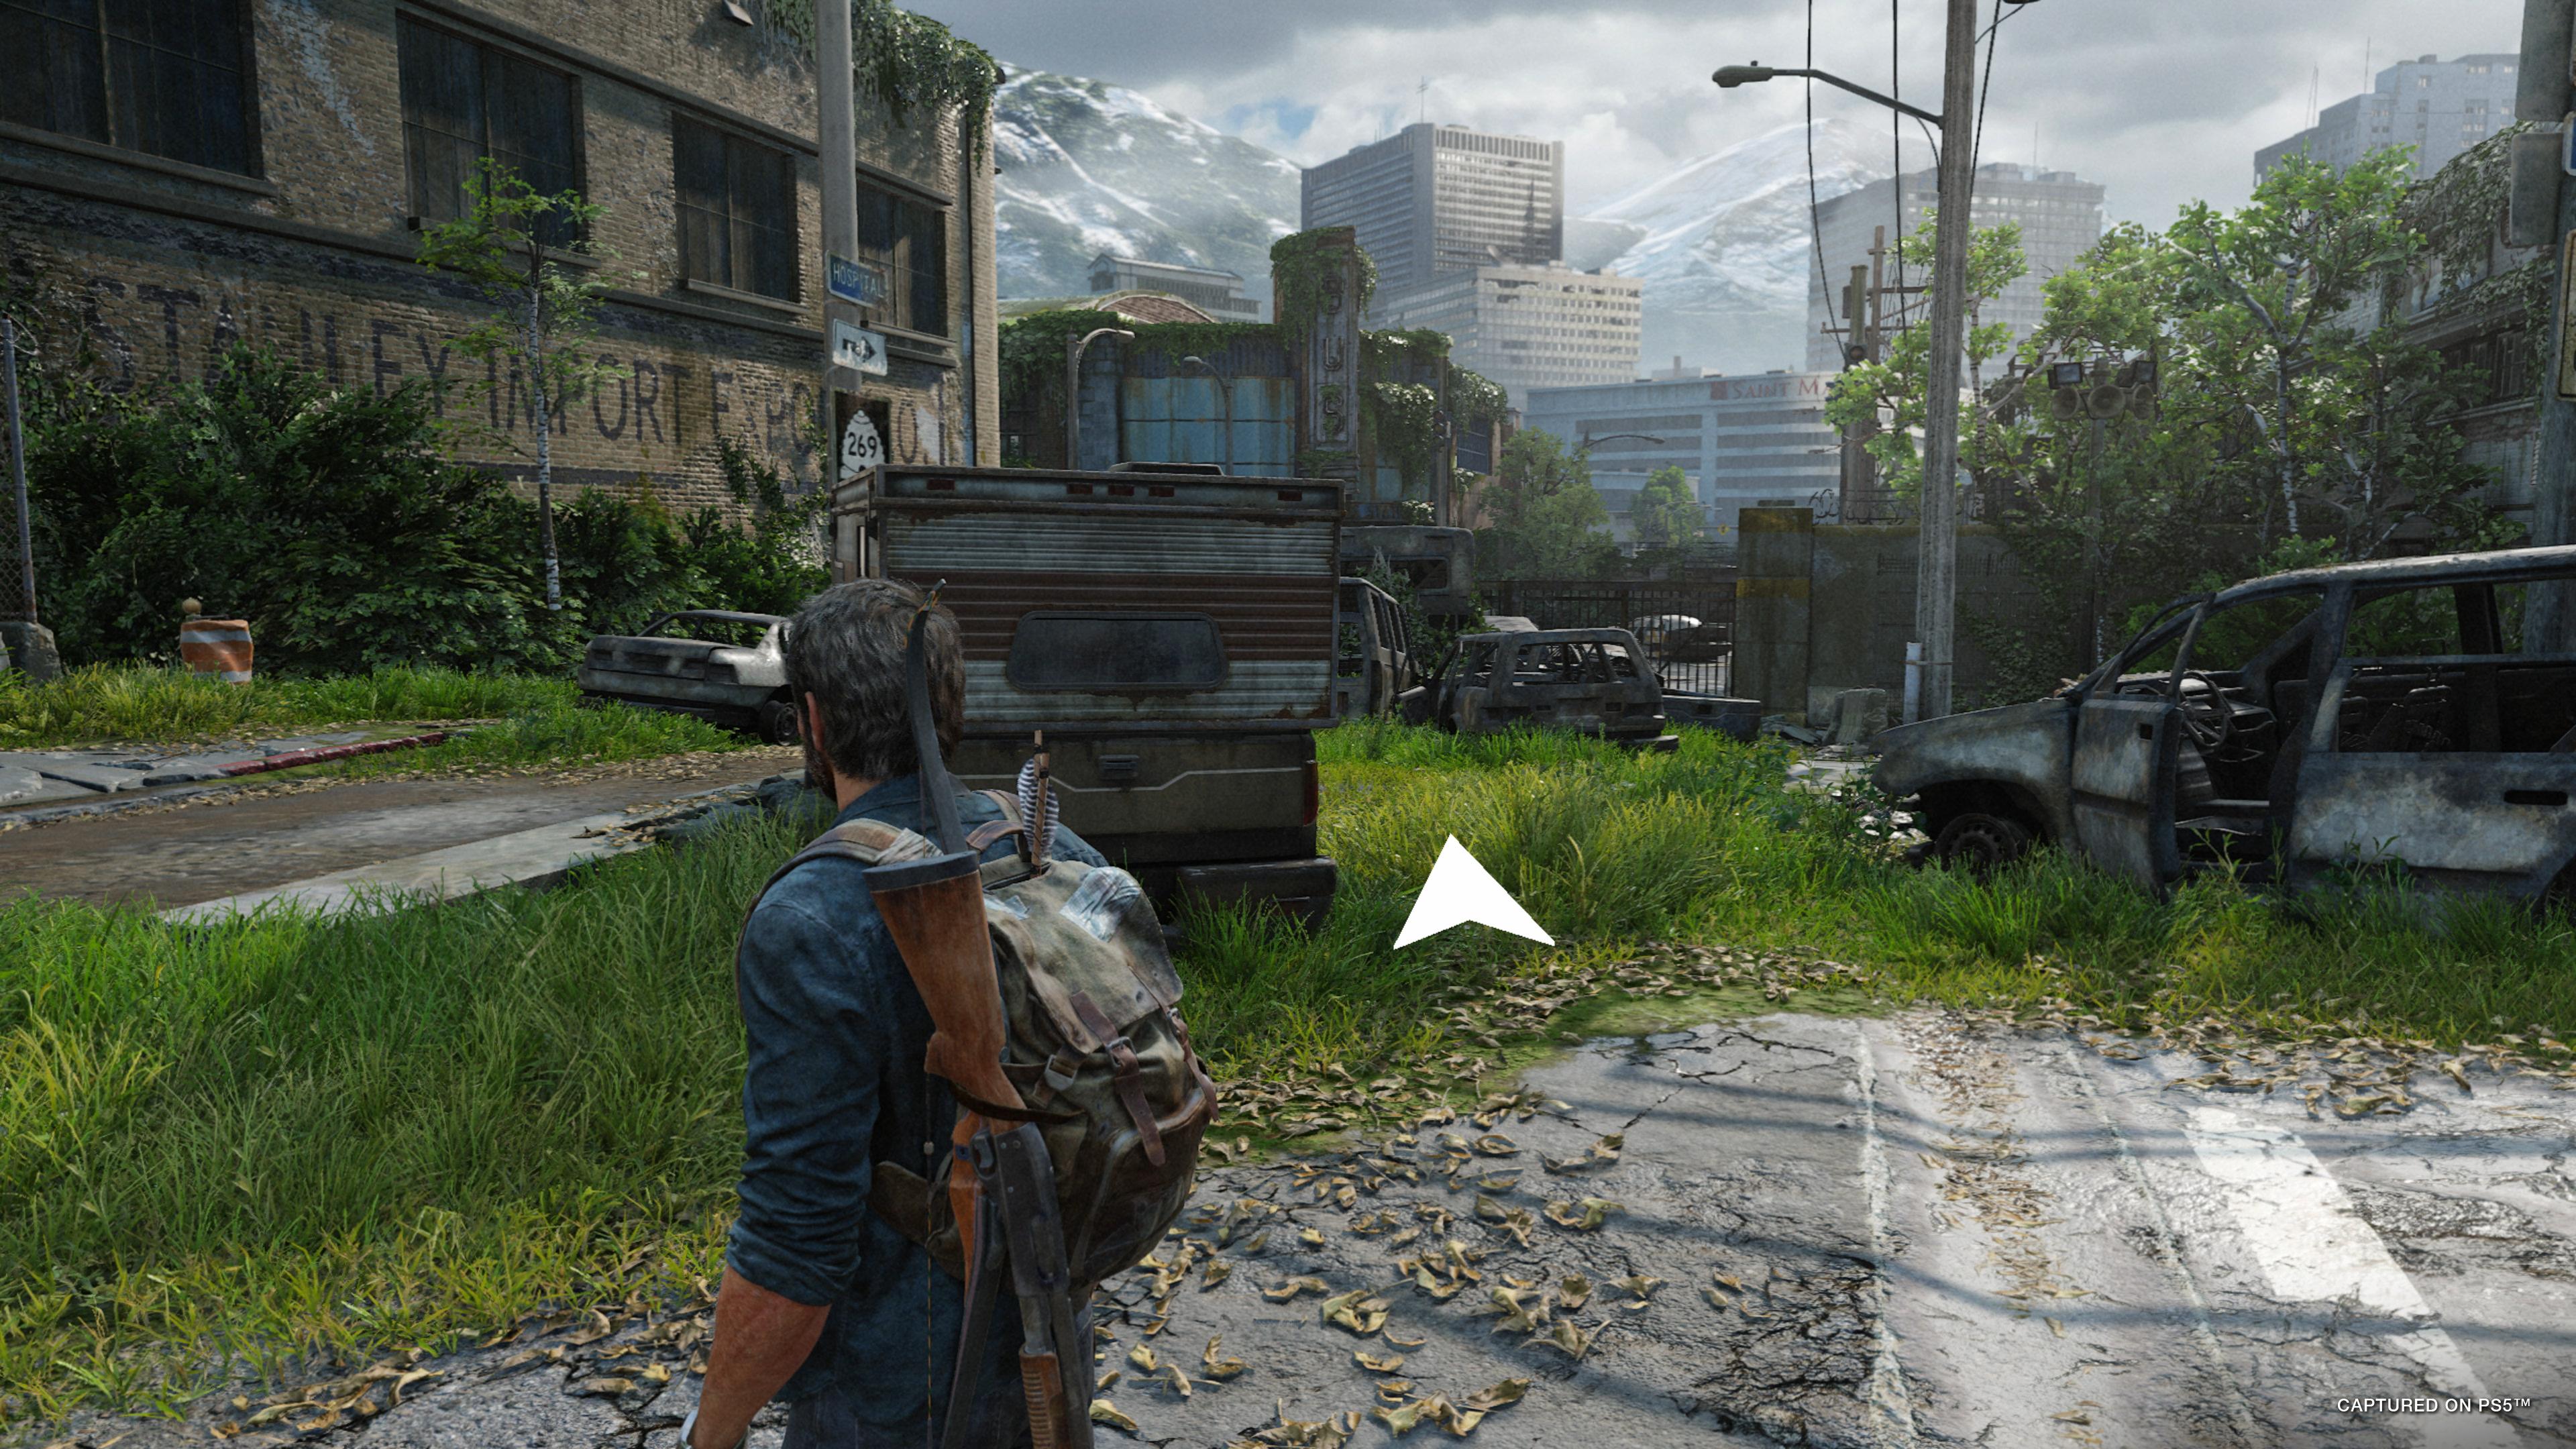 The Last of Us Remake já se encontra disponível no PlayStation 5